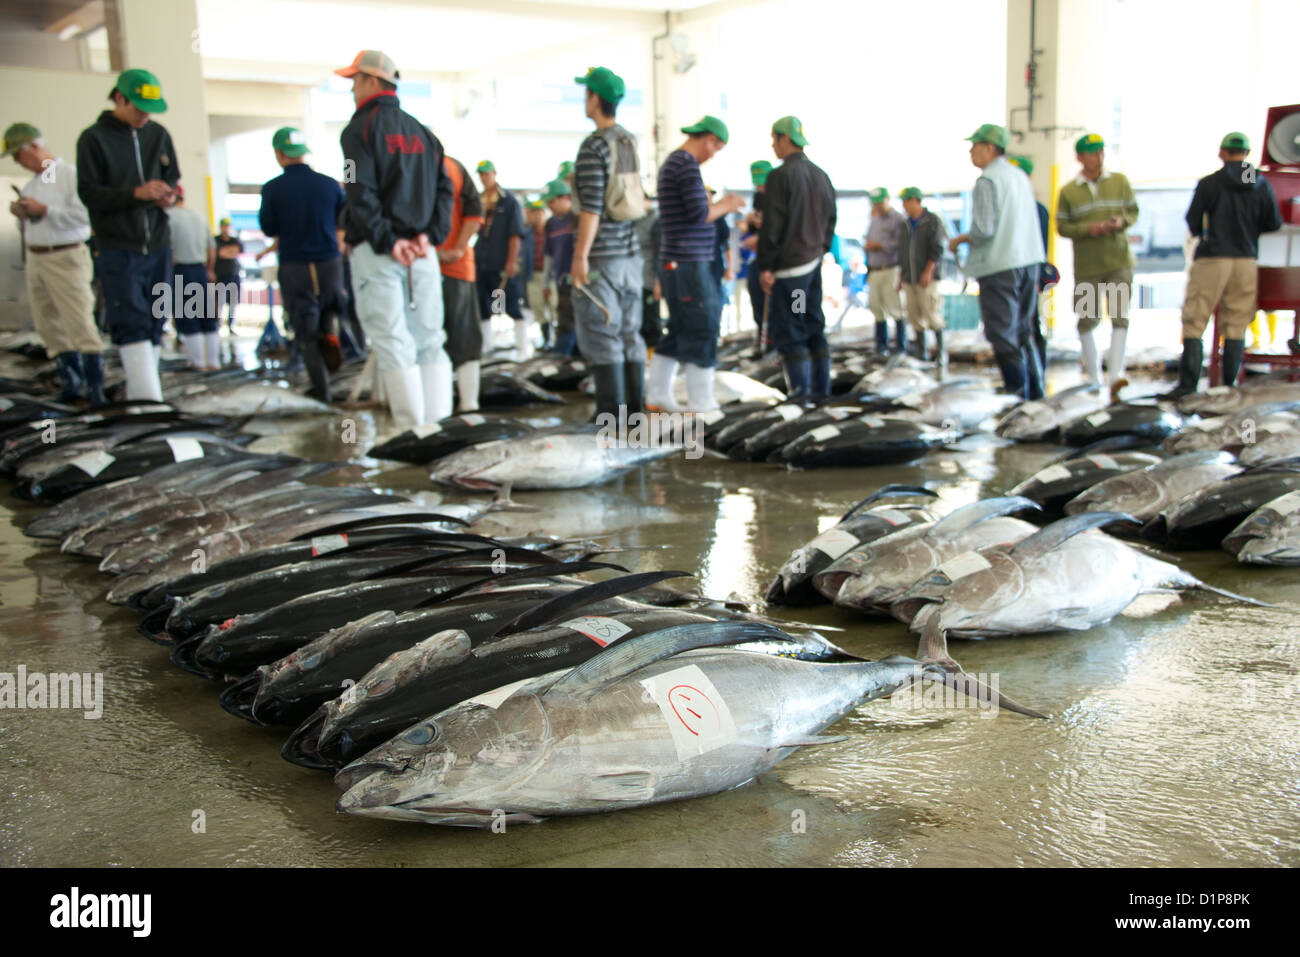 The fish market at Kii Katsura, Wakayama Japan - fresh Tuna are laid out and sold fresh off the boats each morning. Stock Photo